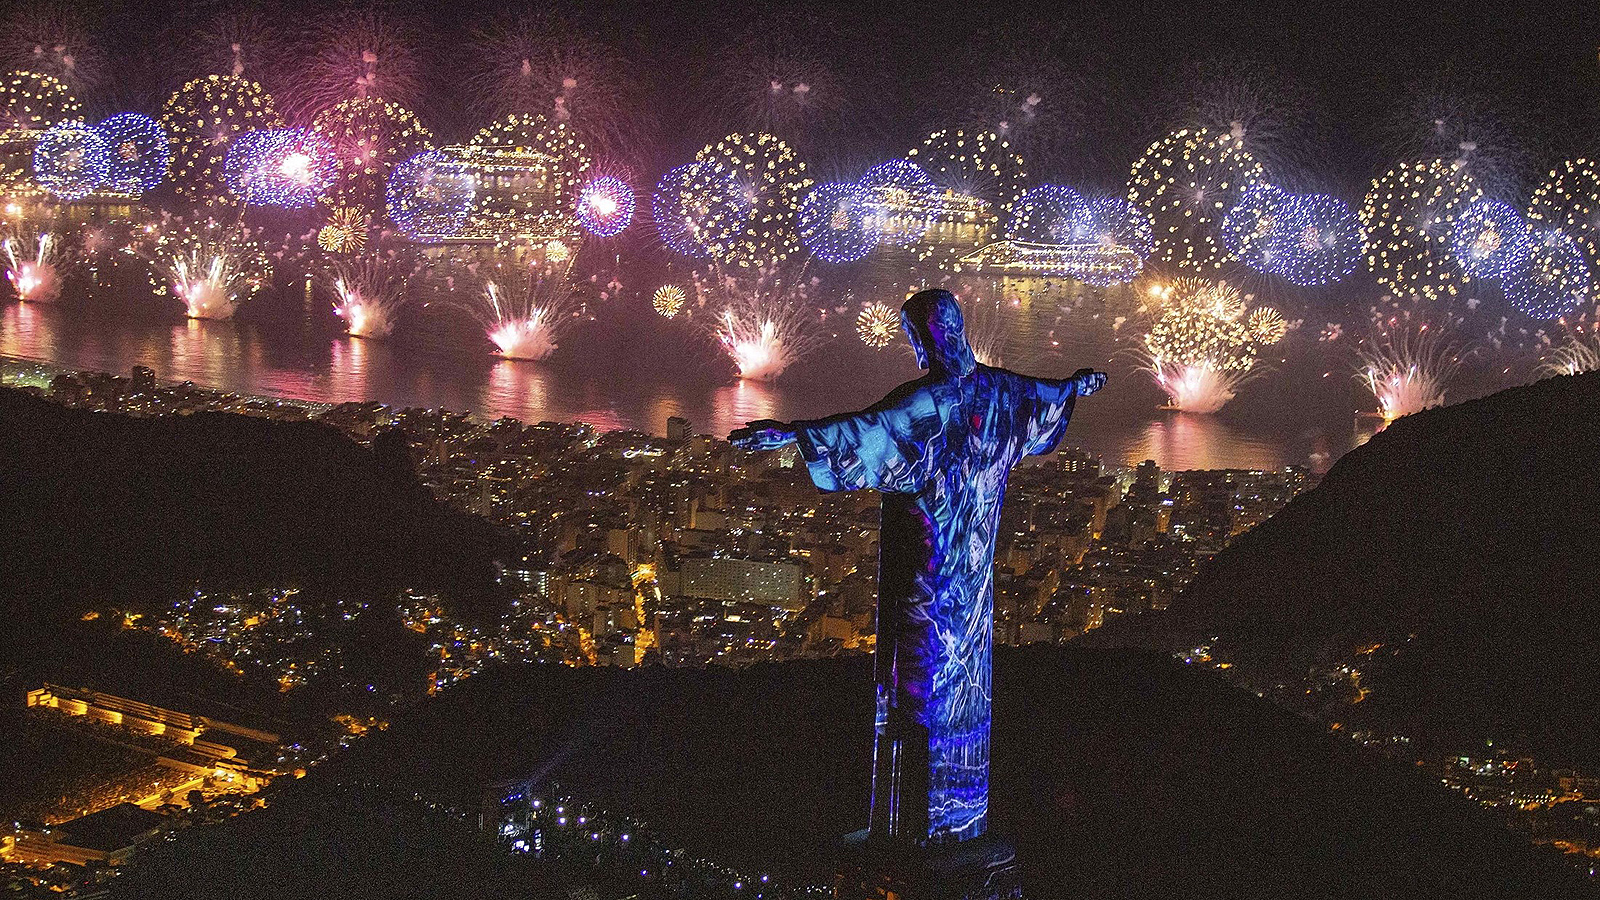 Рио де Жанейро, Бразилия